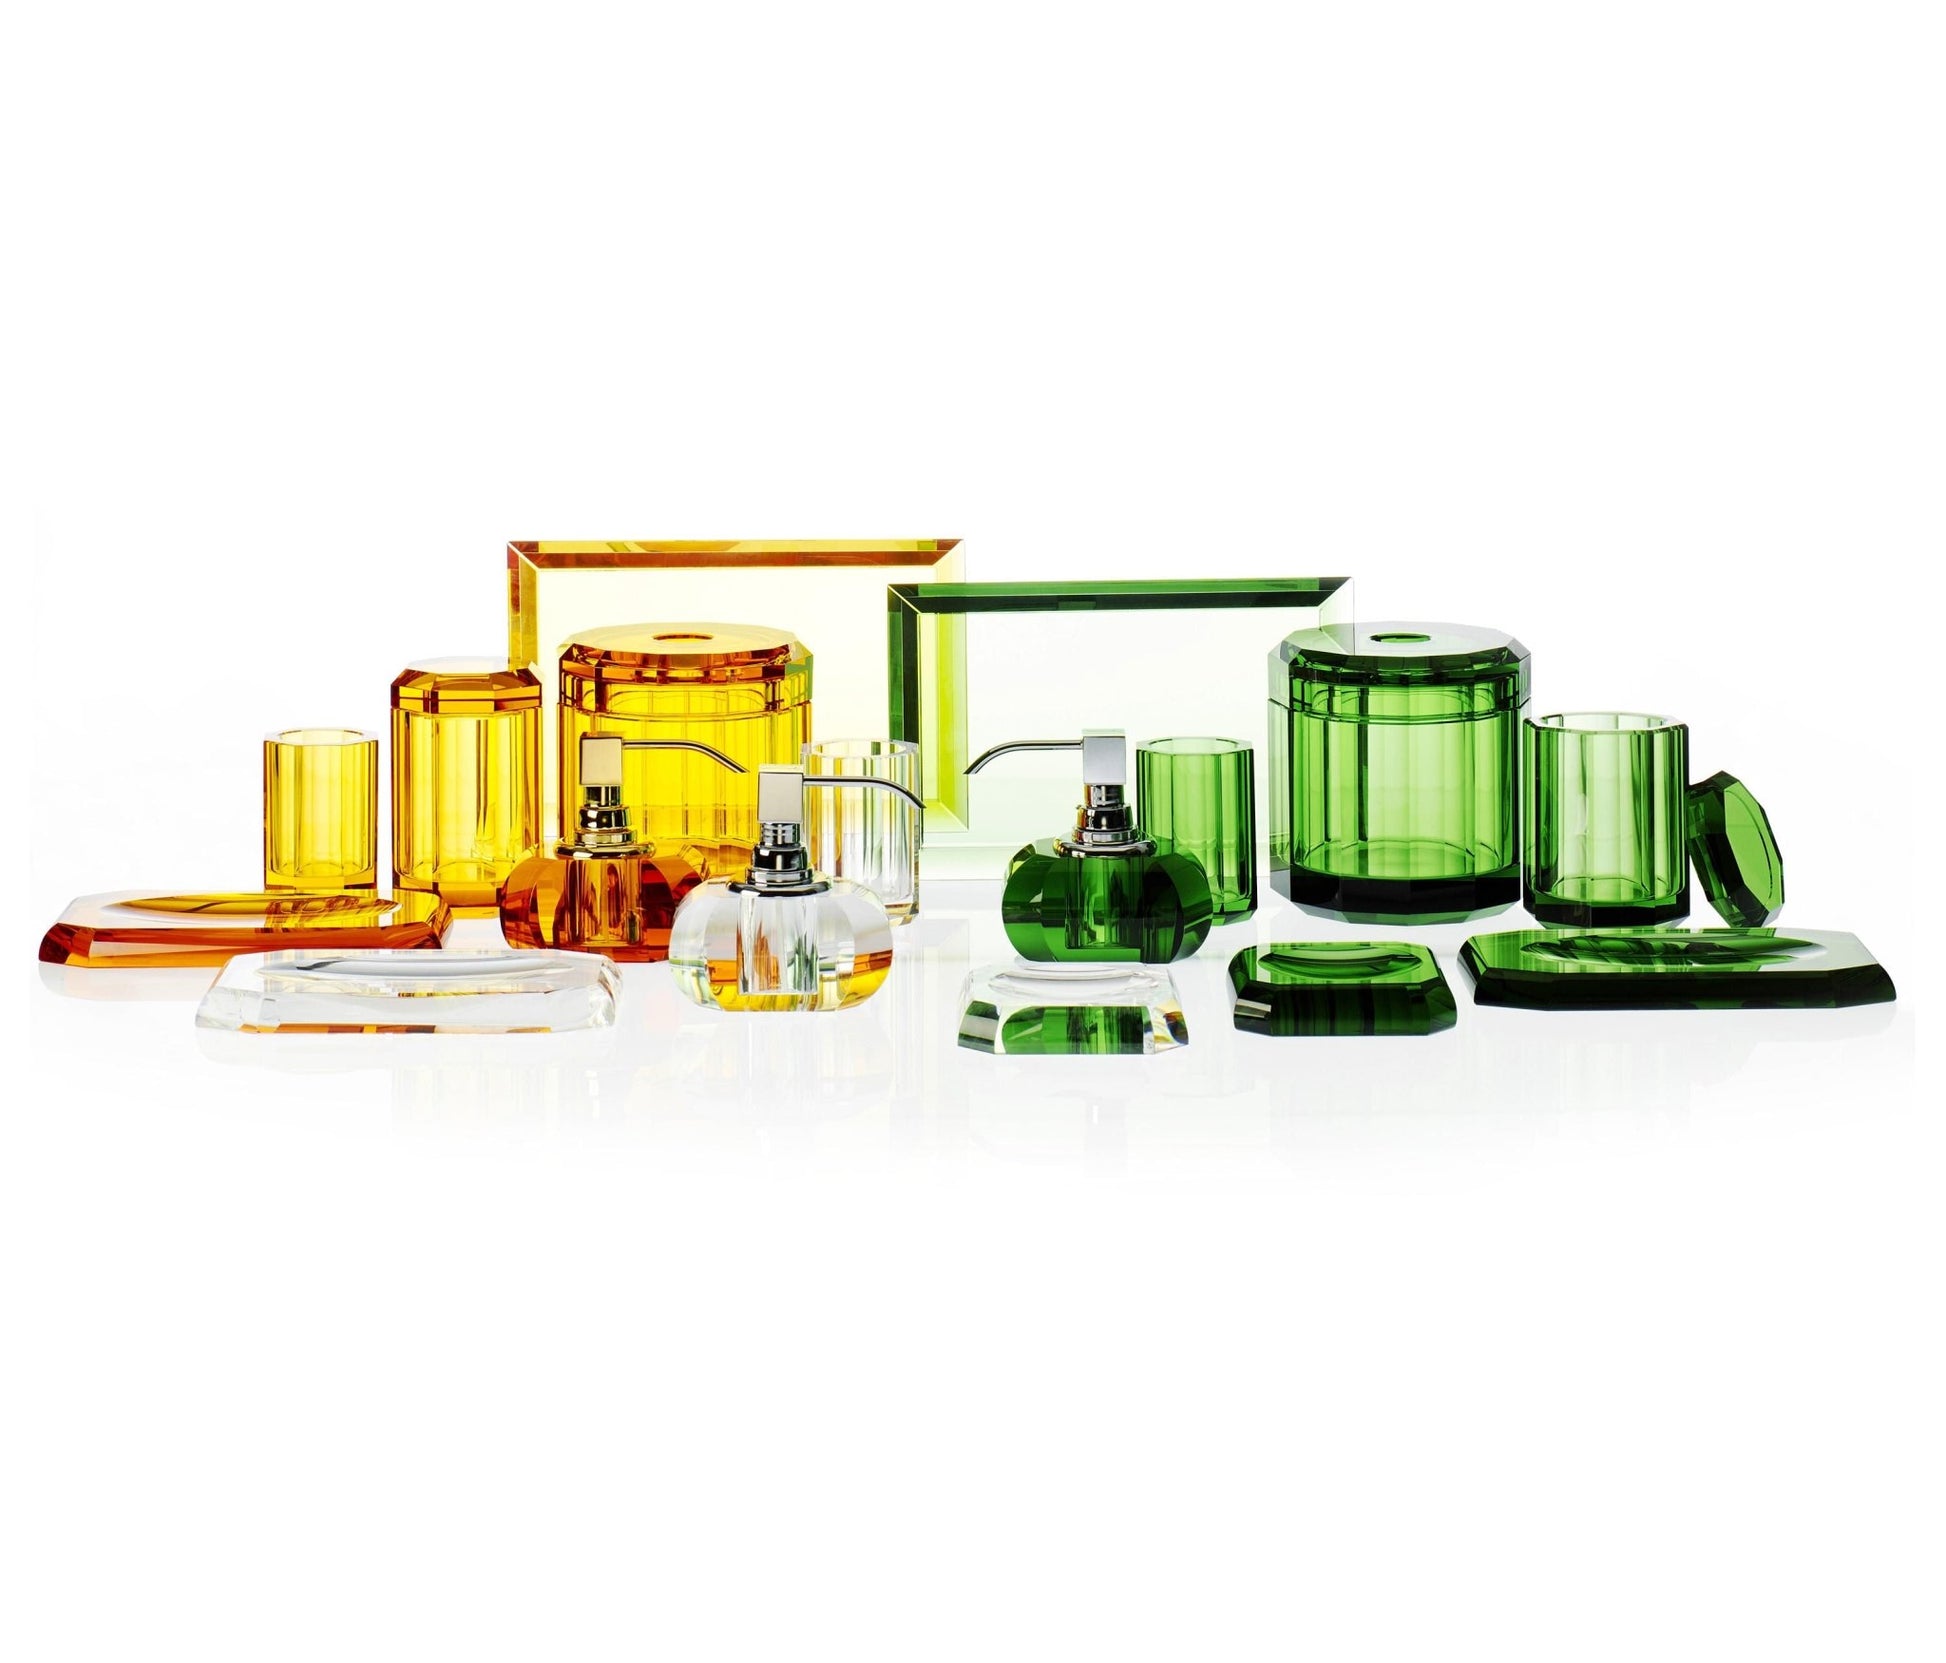 Luxury English GreenCrystal Glass Toothbrush Tumbler Holder - |VESIMI Design| Luxury Bathrooms & Deco